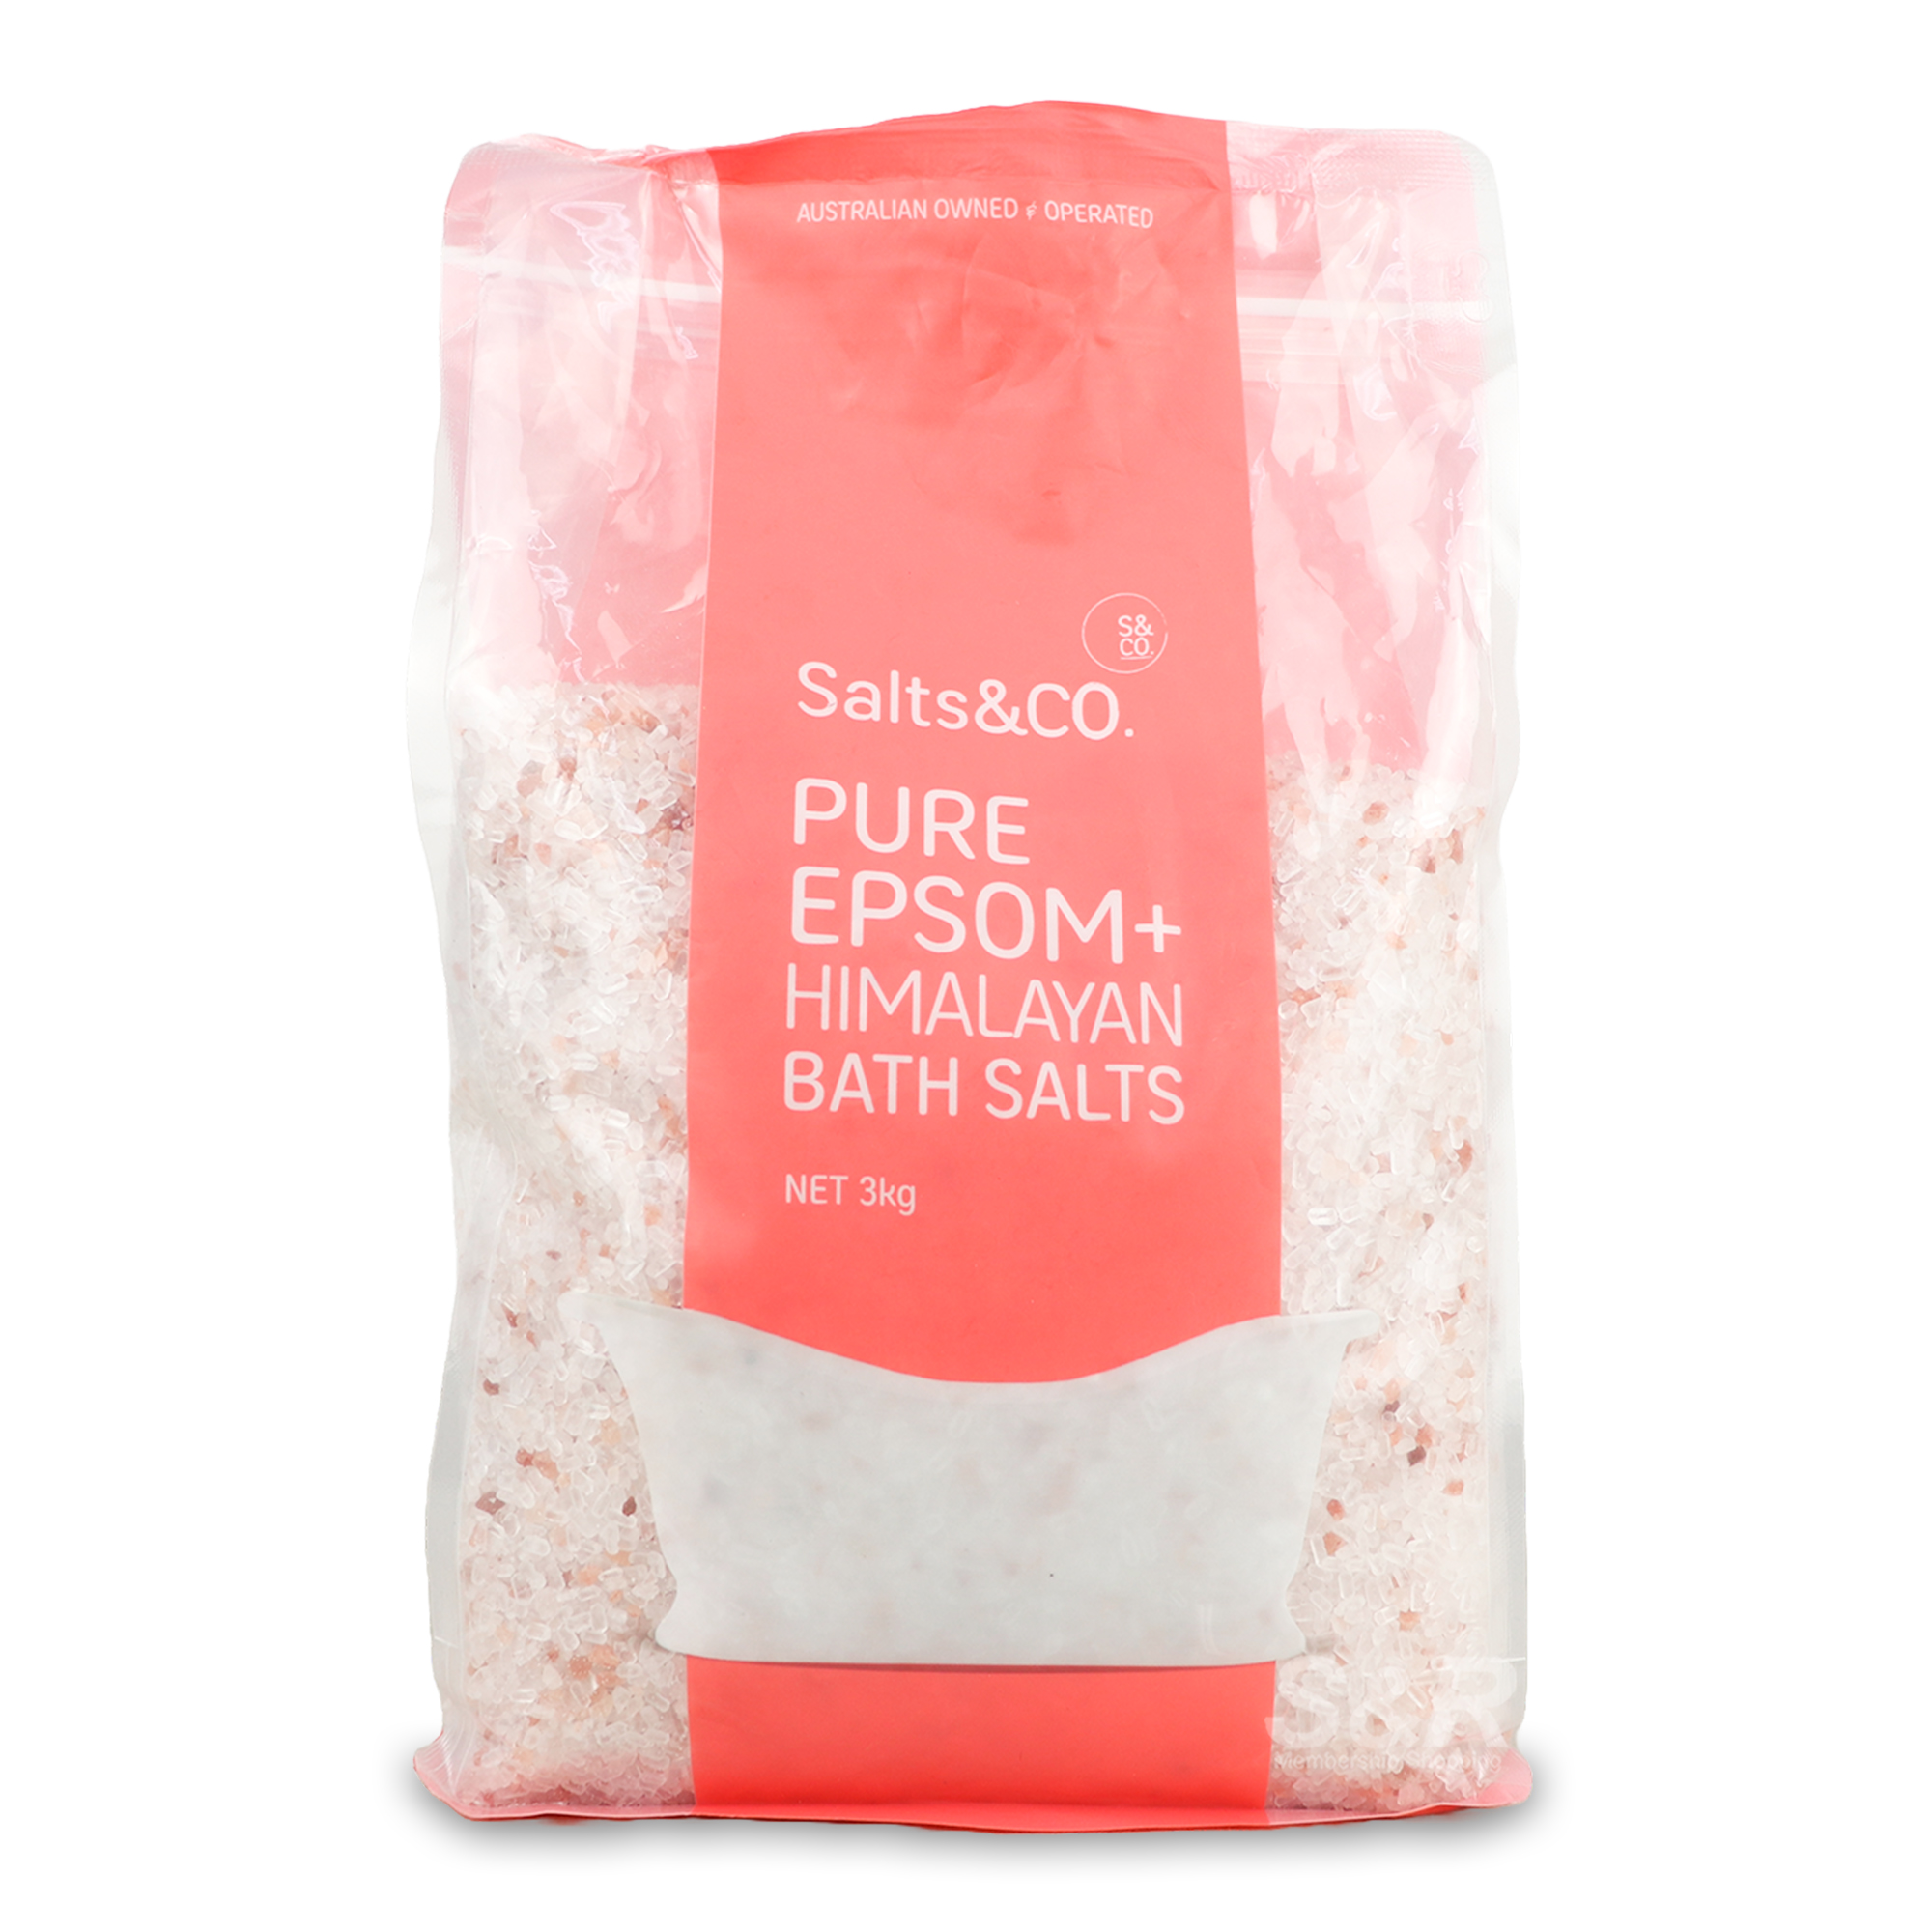 Salts&Co Pure Epsom+ Himalayan Bath Salts 3kg